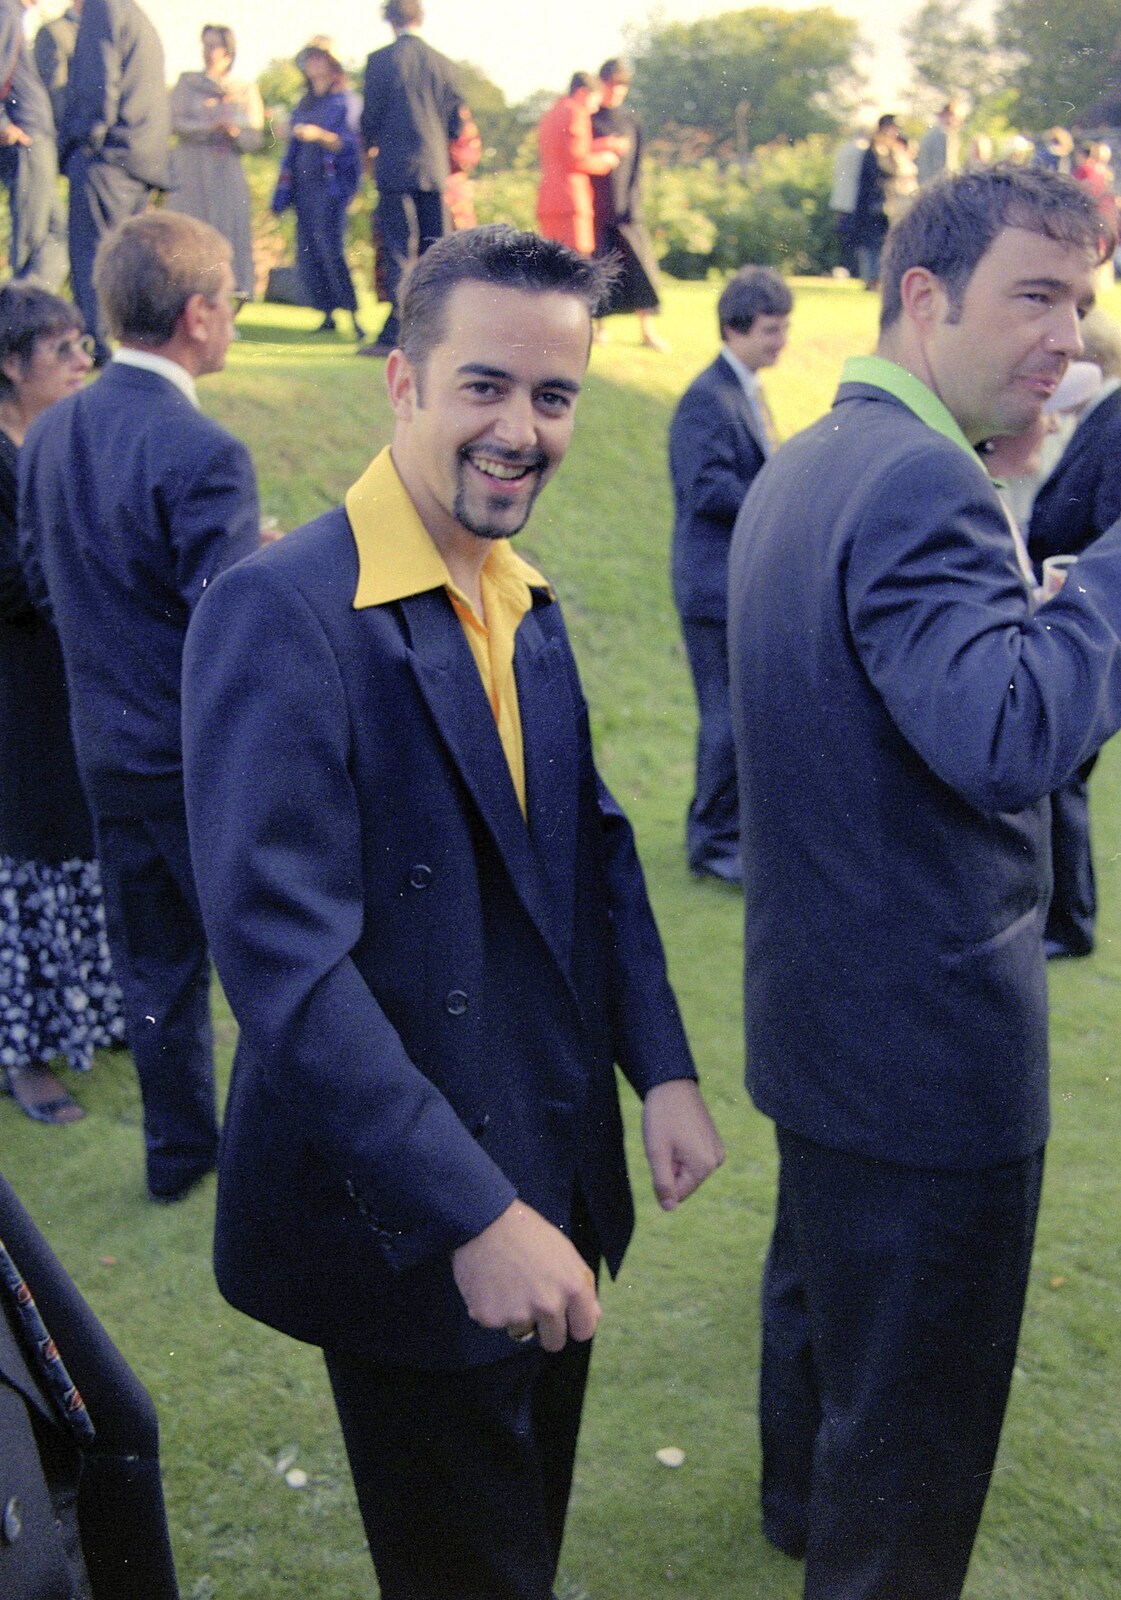 Stuart and Sarah's CISU Wedding, Naworth Castle, Brampton, Cumbria - 21st September 1996: Trev and his wicked suit